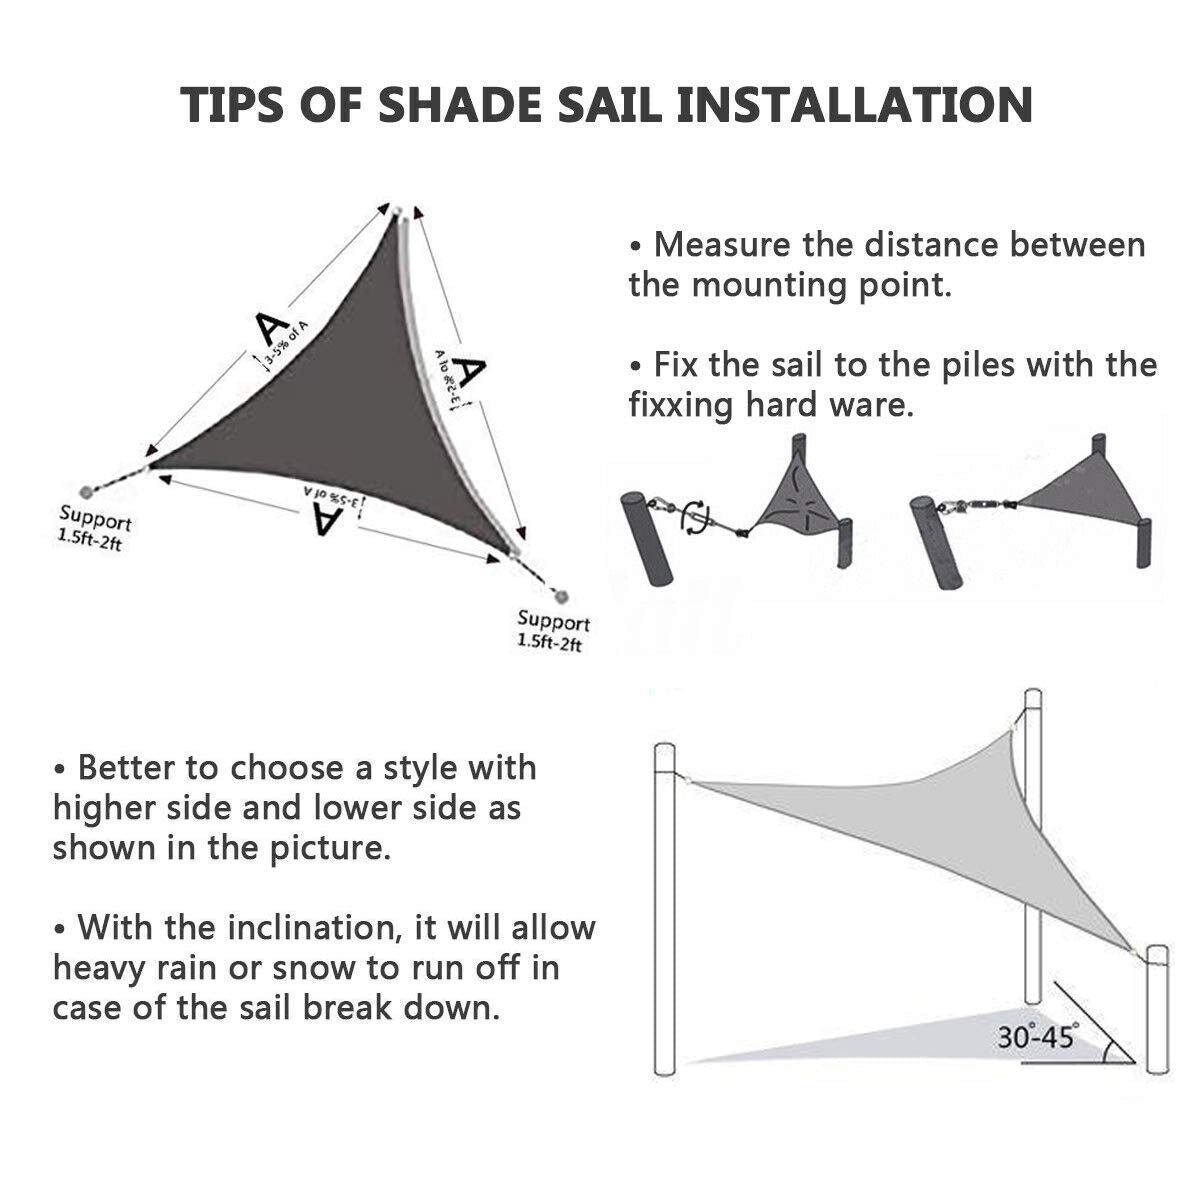 SUNLAX Sun Shade Sail,16&#39;x 16&#39;x 22&#39; Blue Right Triangle Canopy Shades for Outdoor Patio Pergola Cover Sunshade Sails UV Blocking